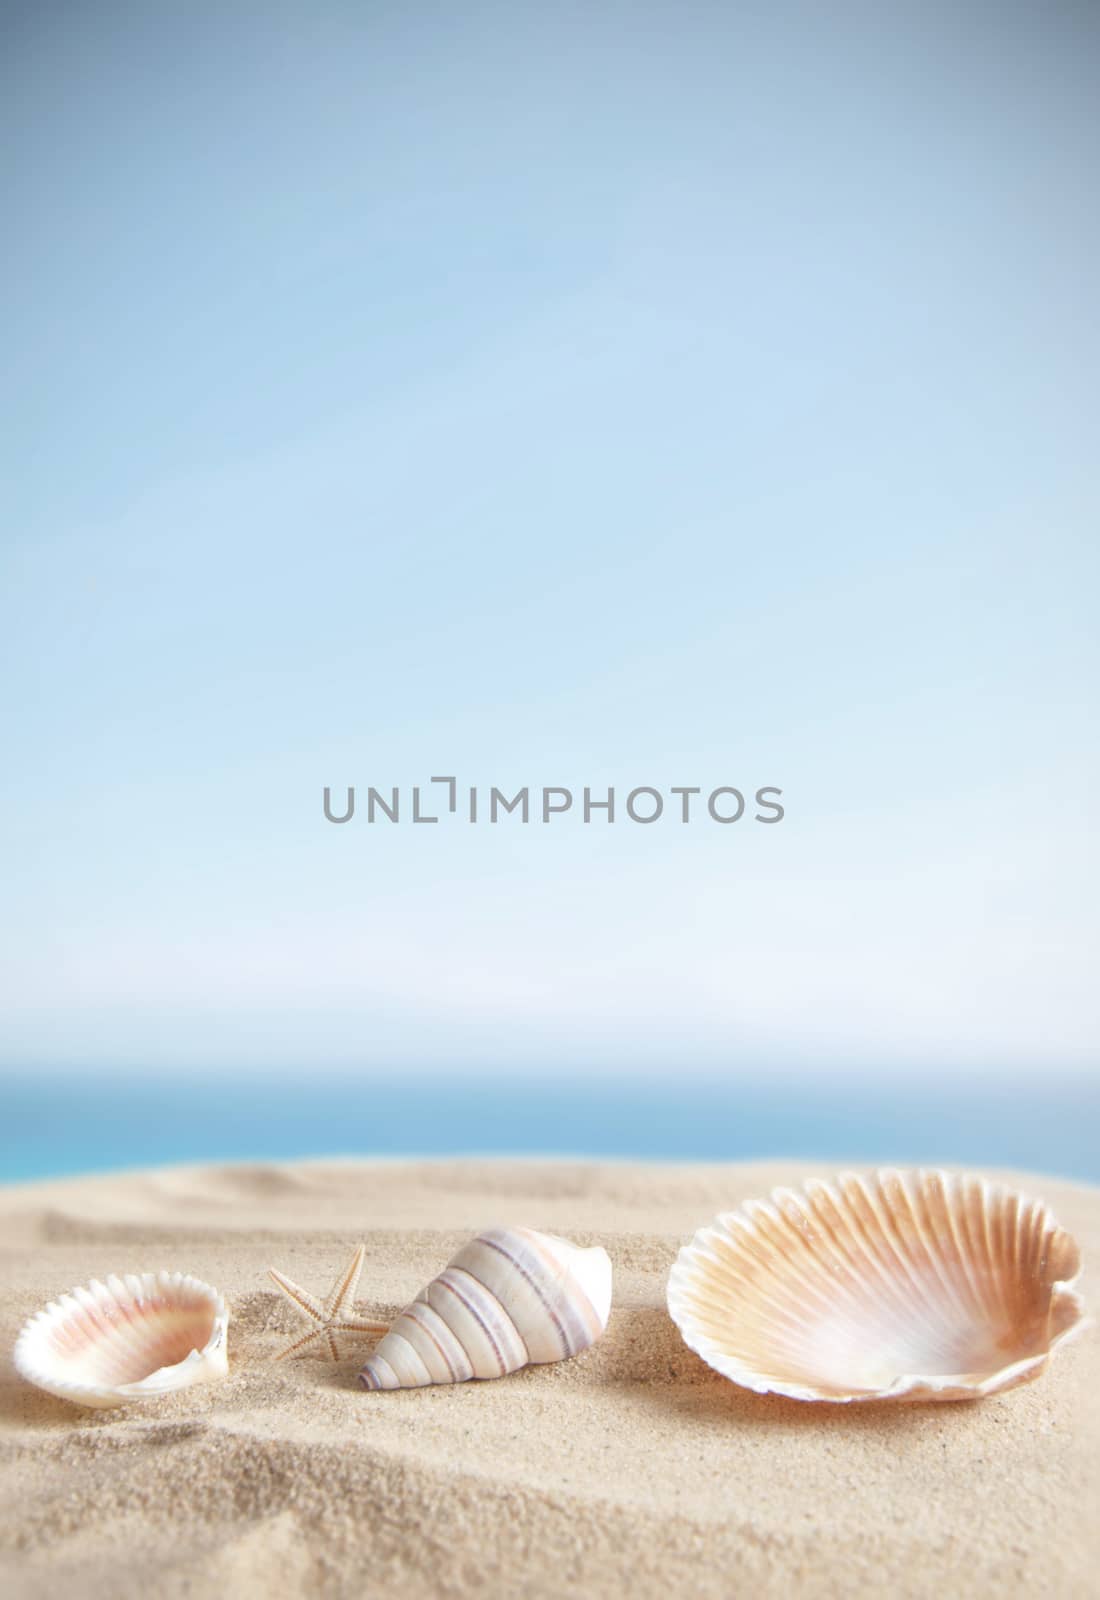 Sea shells on beach sand with blue sky background